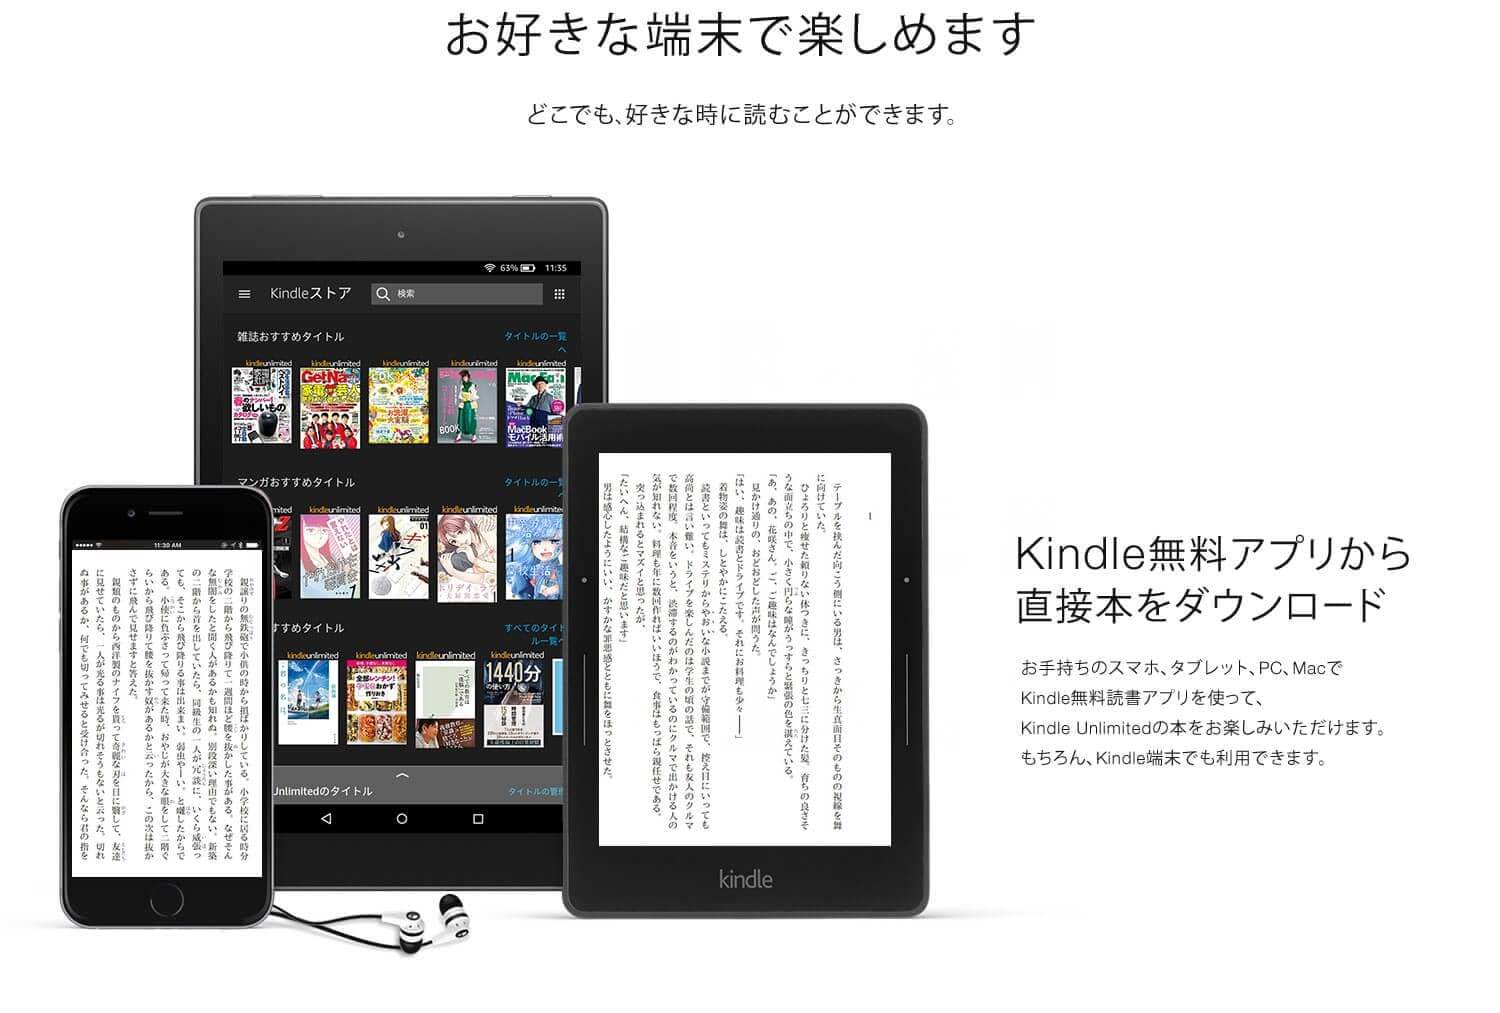 Amazon Kindle Unlimitedは様々なデバイスで読める